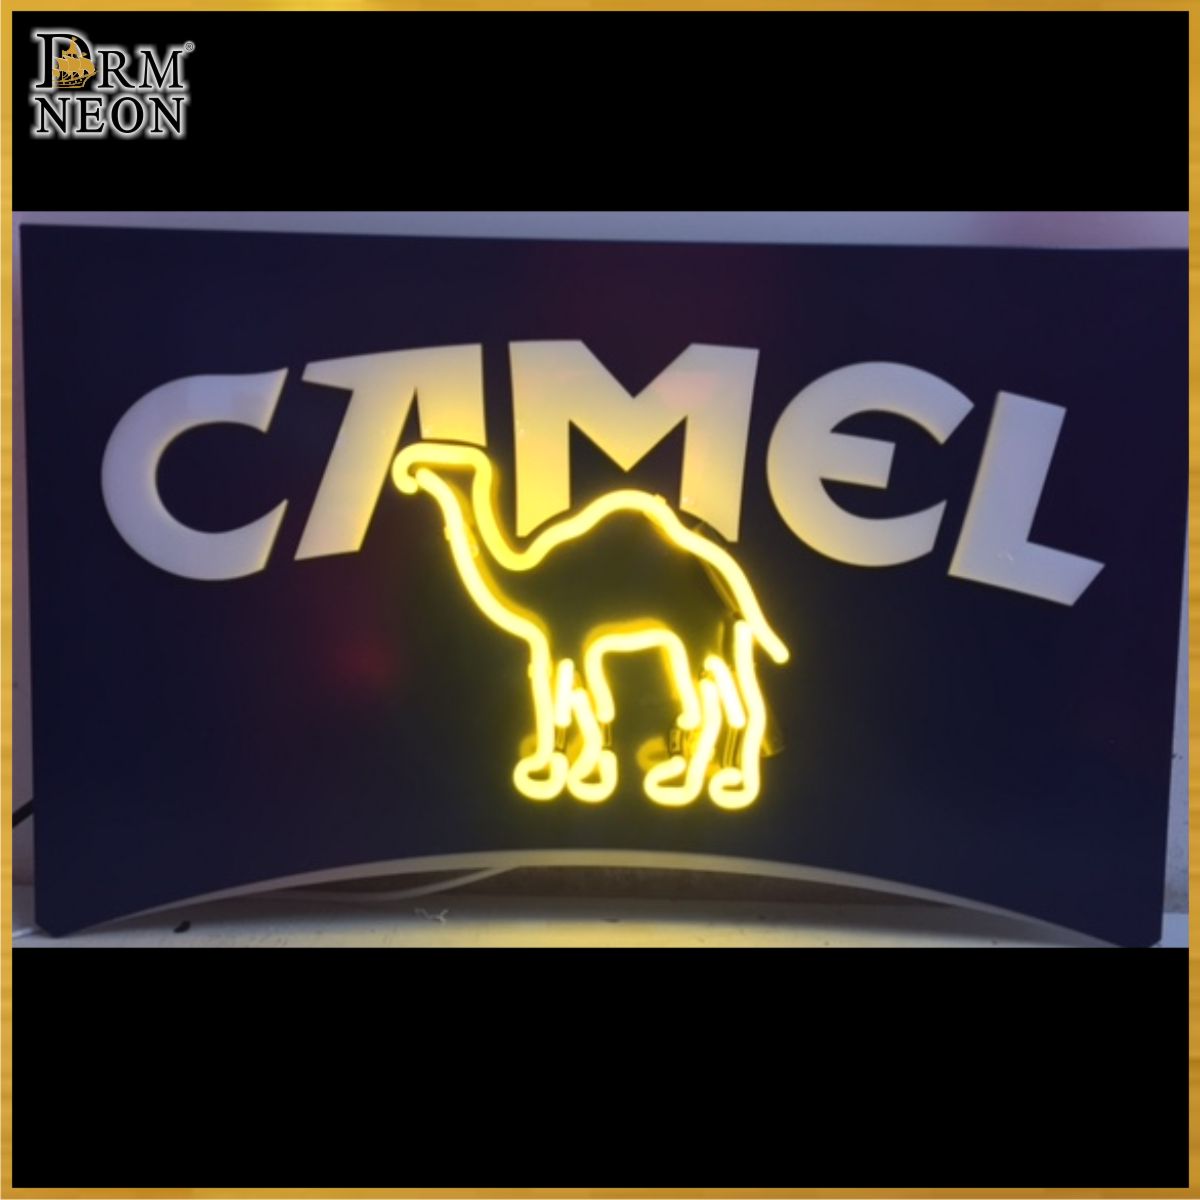 Camel Neon